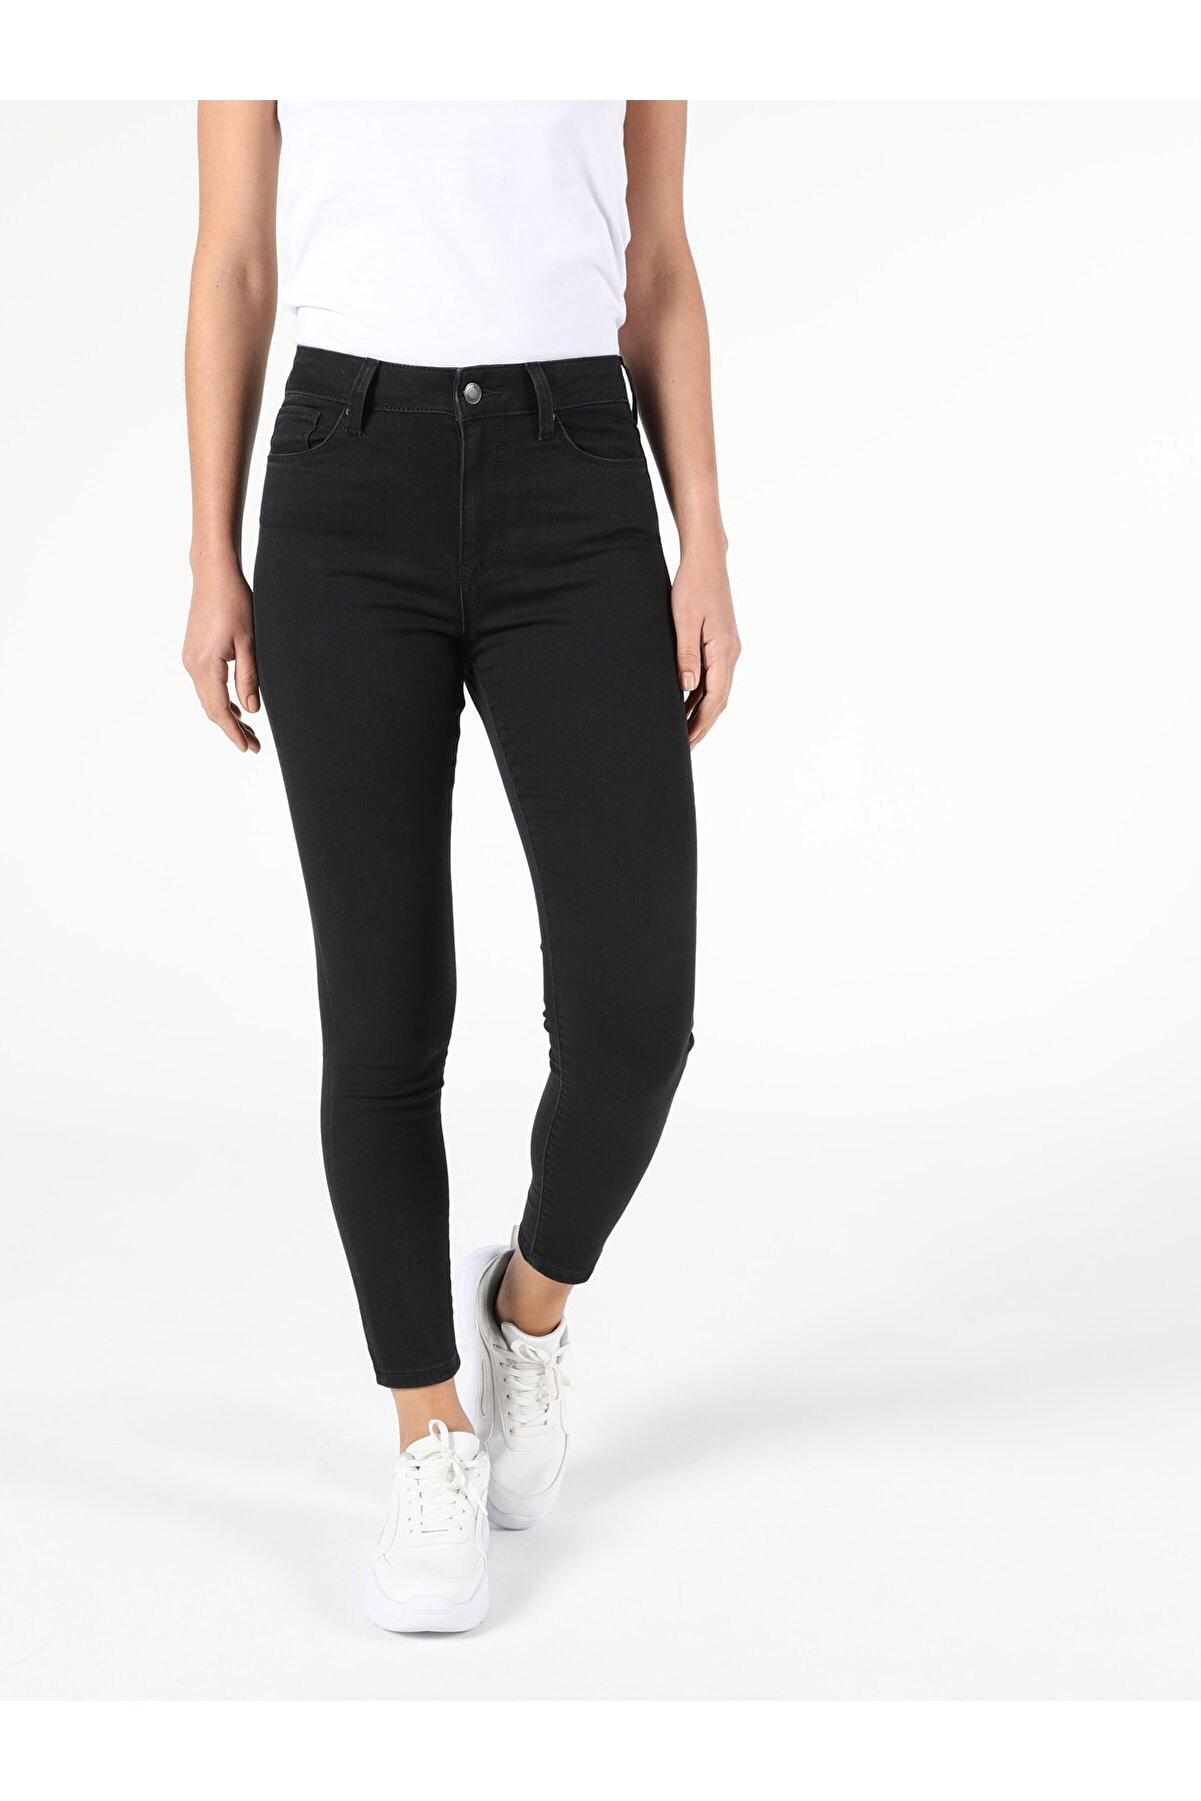 Colin’s 760 Dıana Yüksek Bel Dar Paça Super Slim Fit Siyah Kadın Jean Pantolon